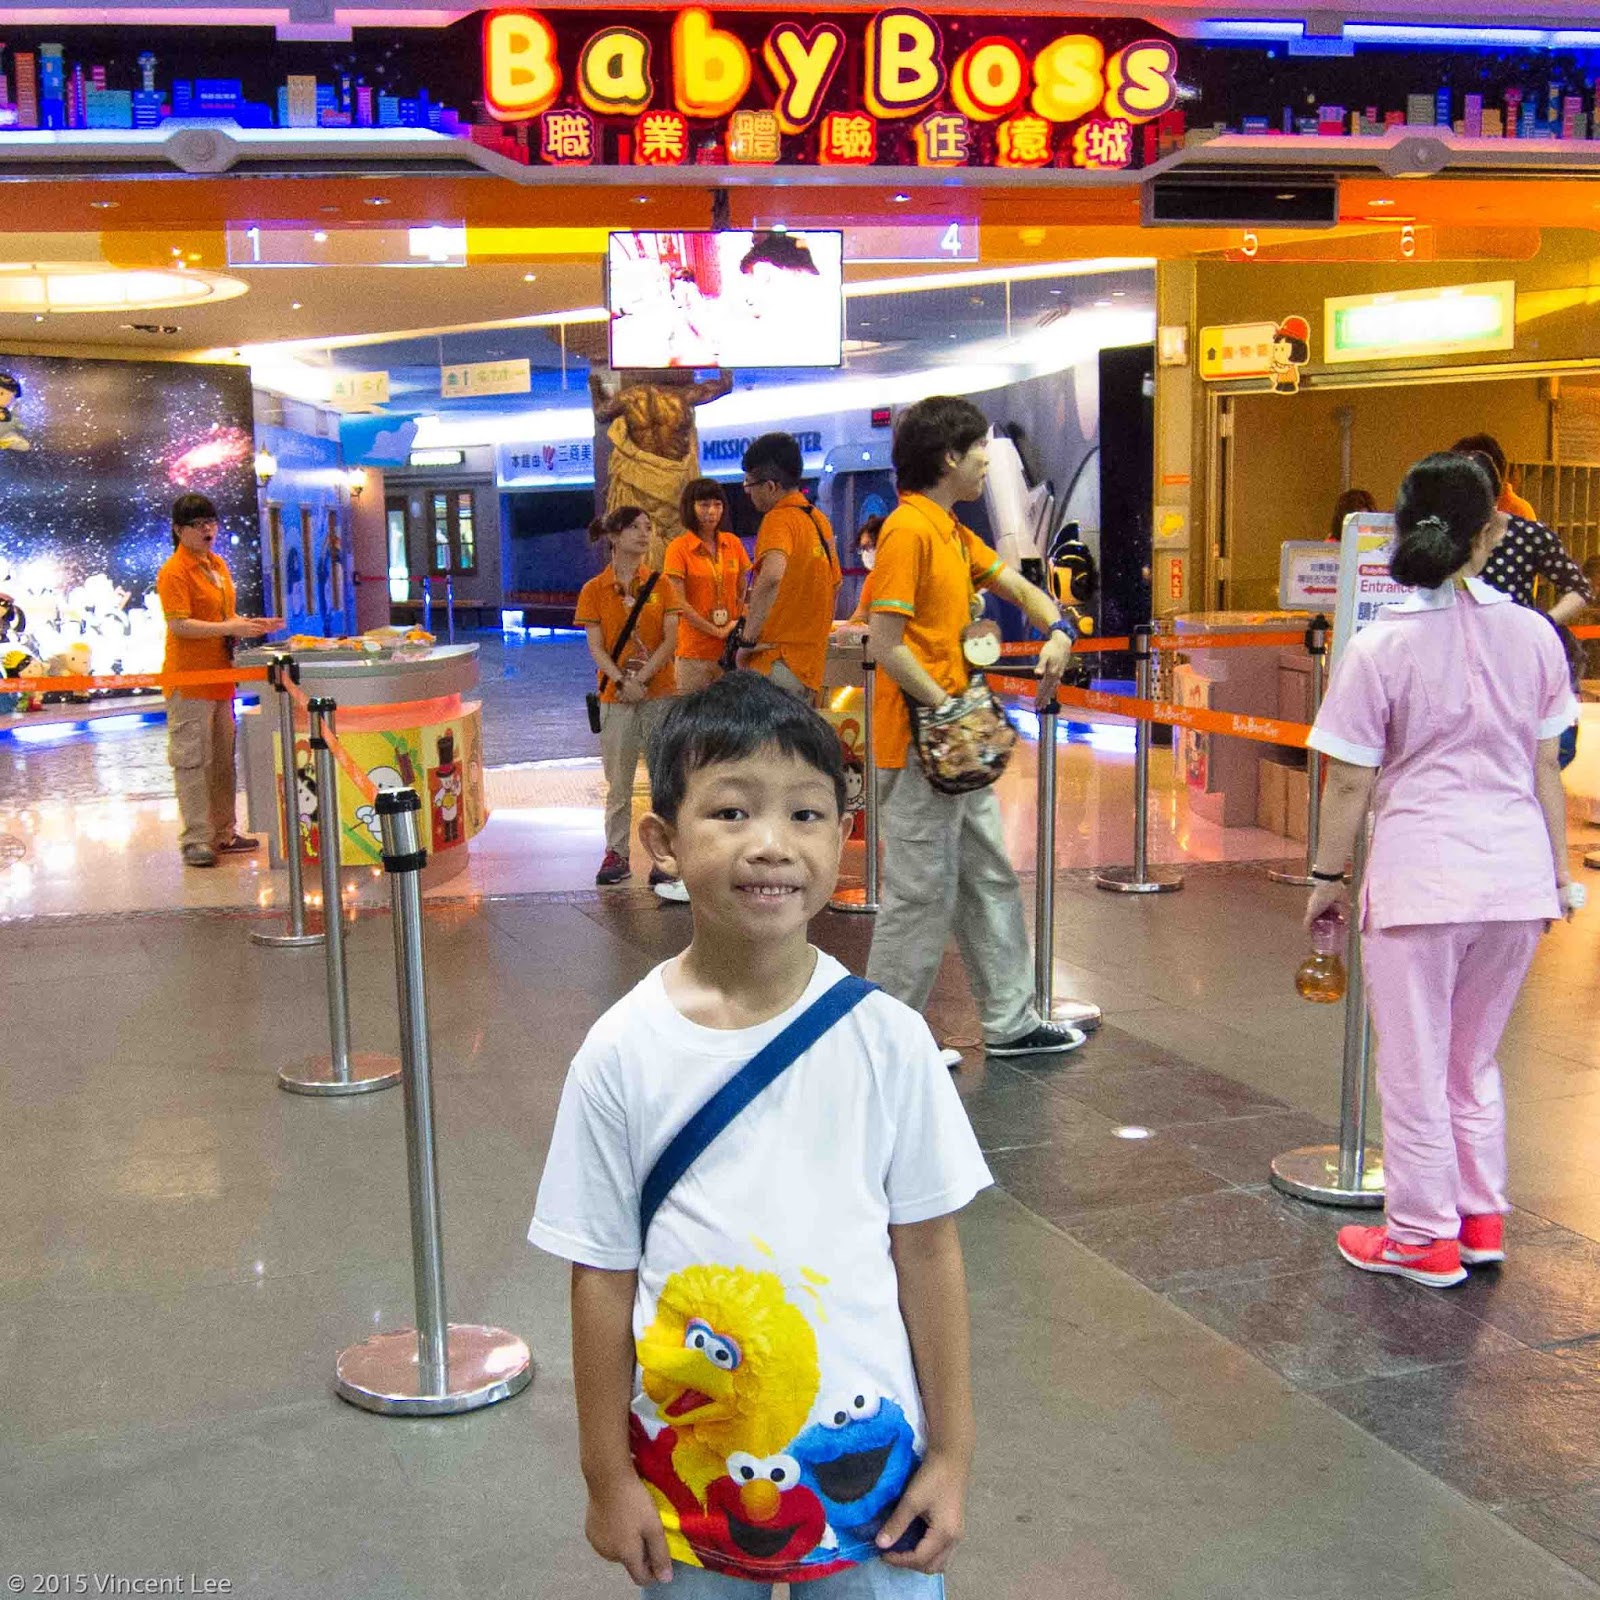 Taiwan 2015 - Day 2: Baby Boss & Rouhe Night - Singapore Parenting and Lifestyle Blog | roamingglass